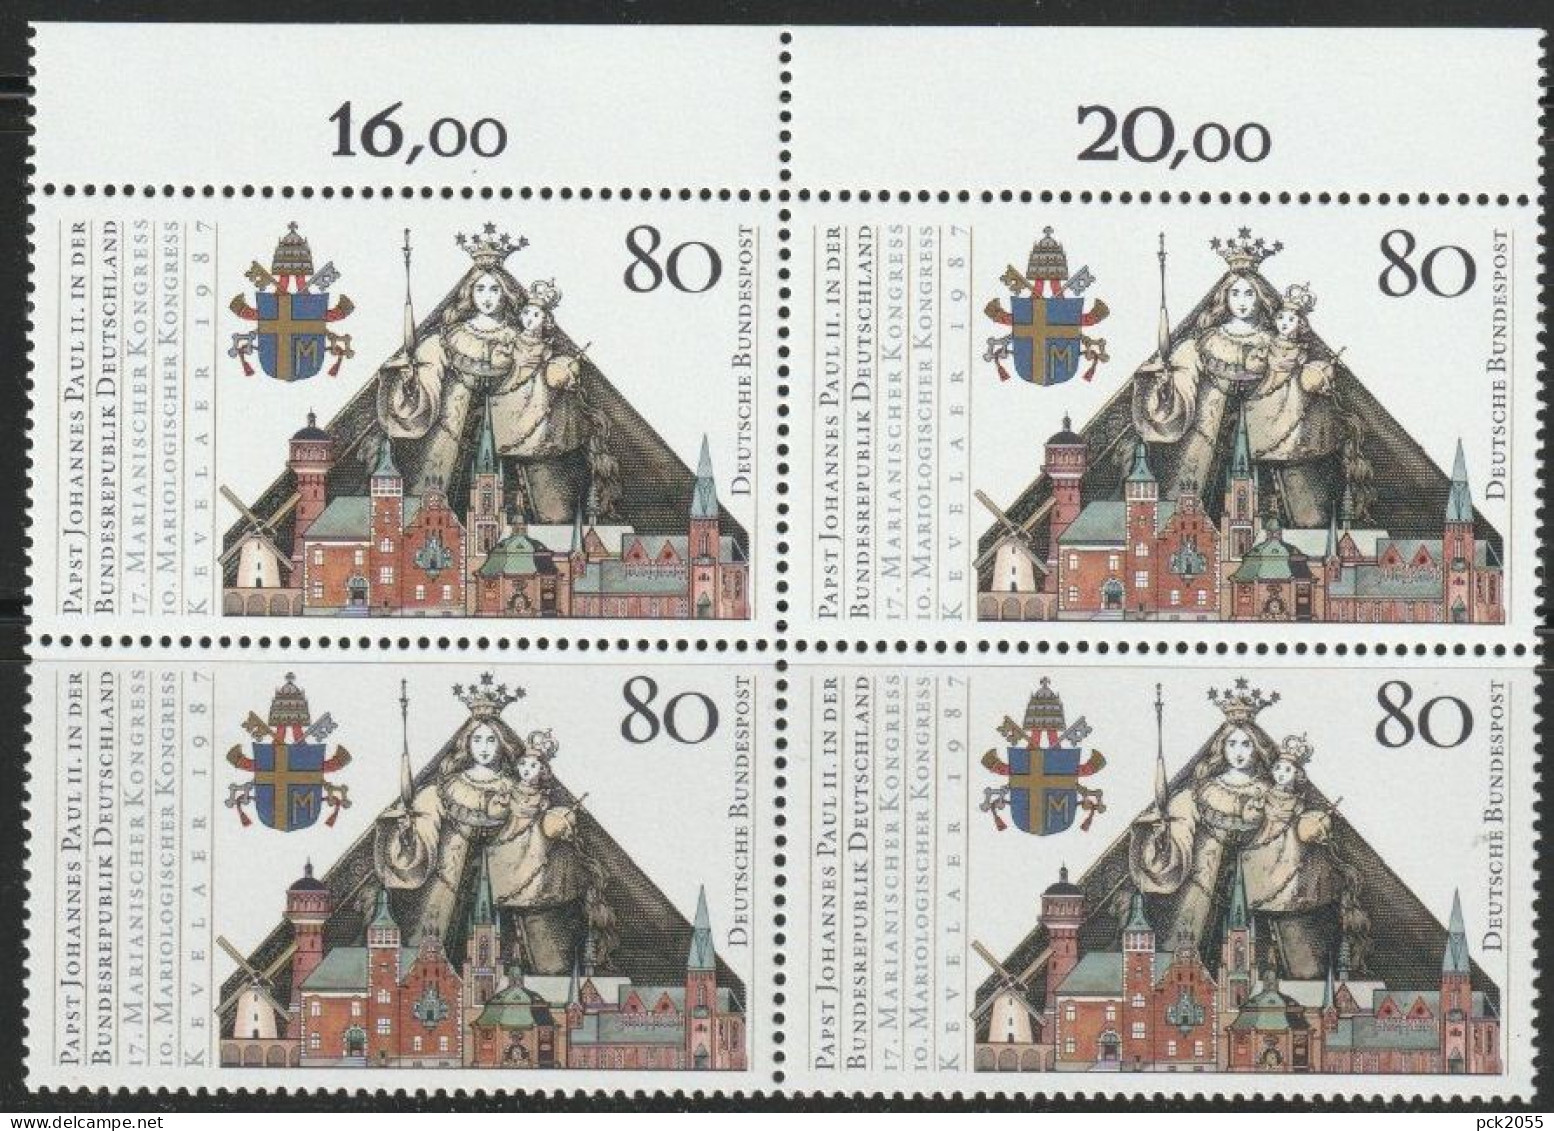 BRD 1987 MiNr.1320 4er Block ** Postfrisch Besuch Papst Johannes Paul II  ( 456 )günstige Versandkosten - Ongebruikt